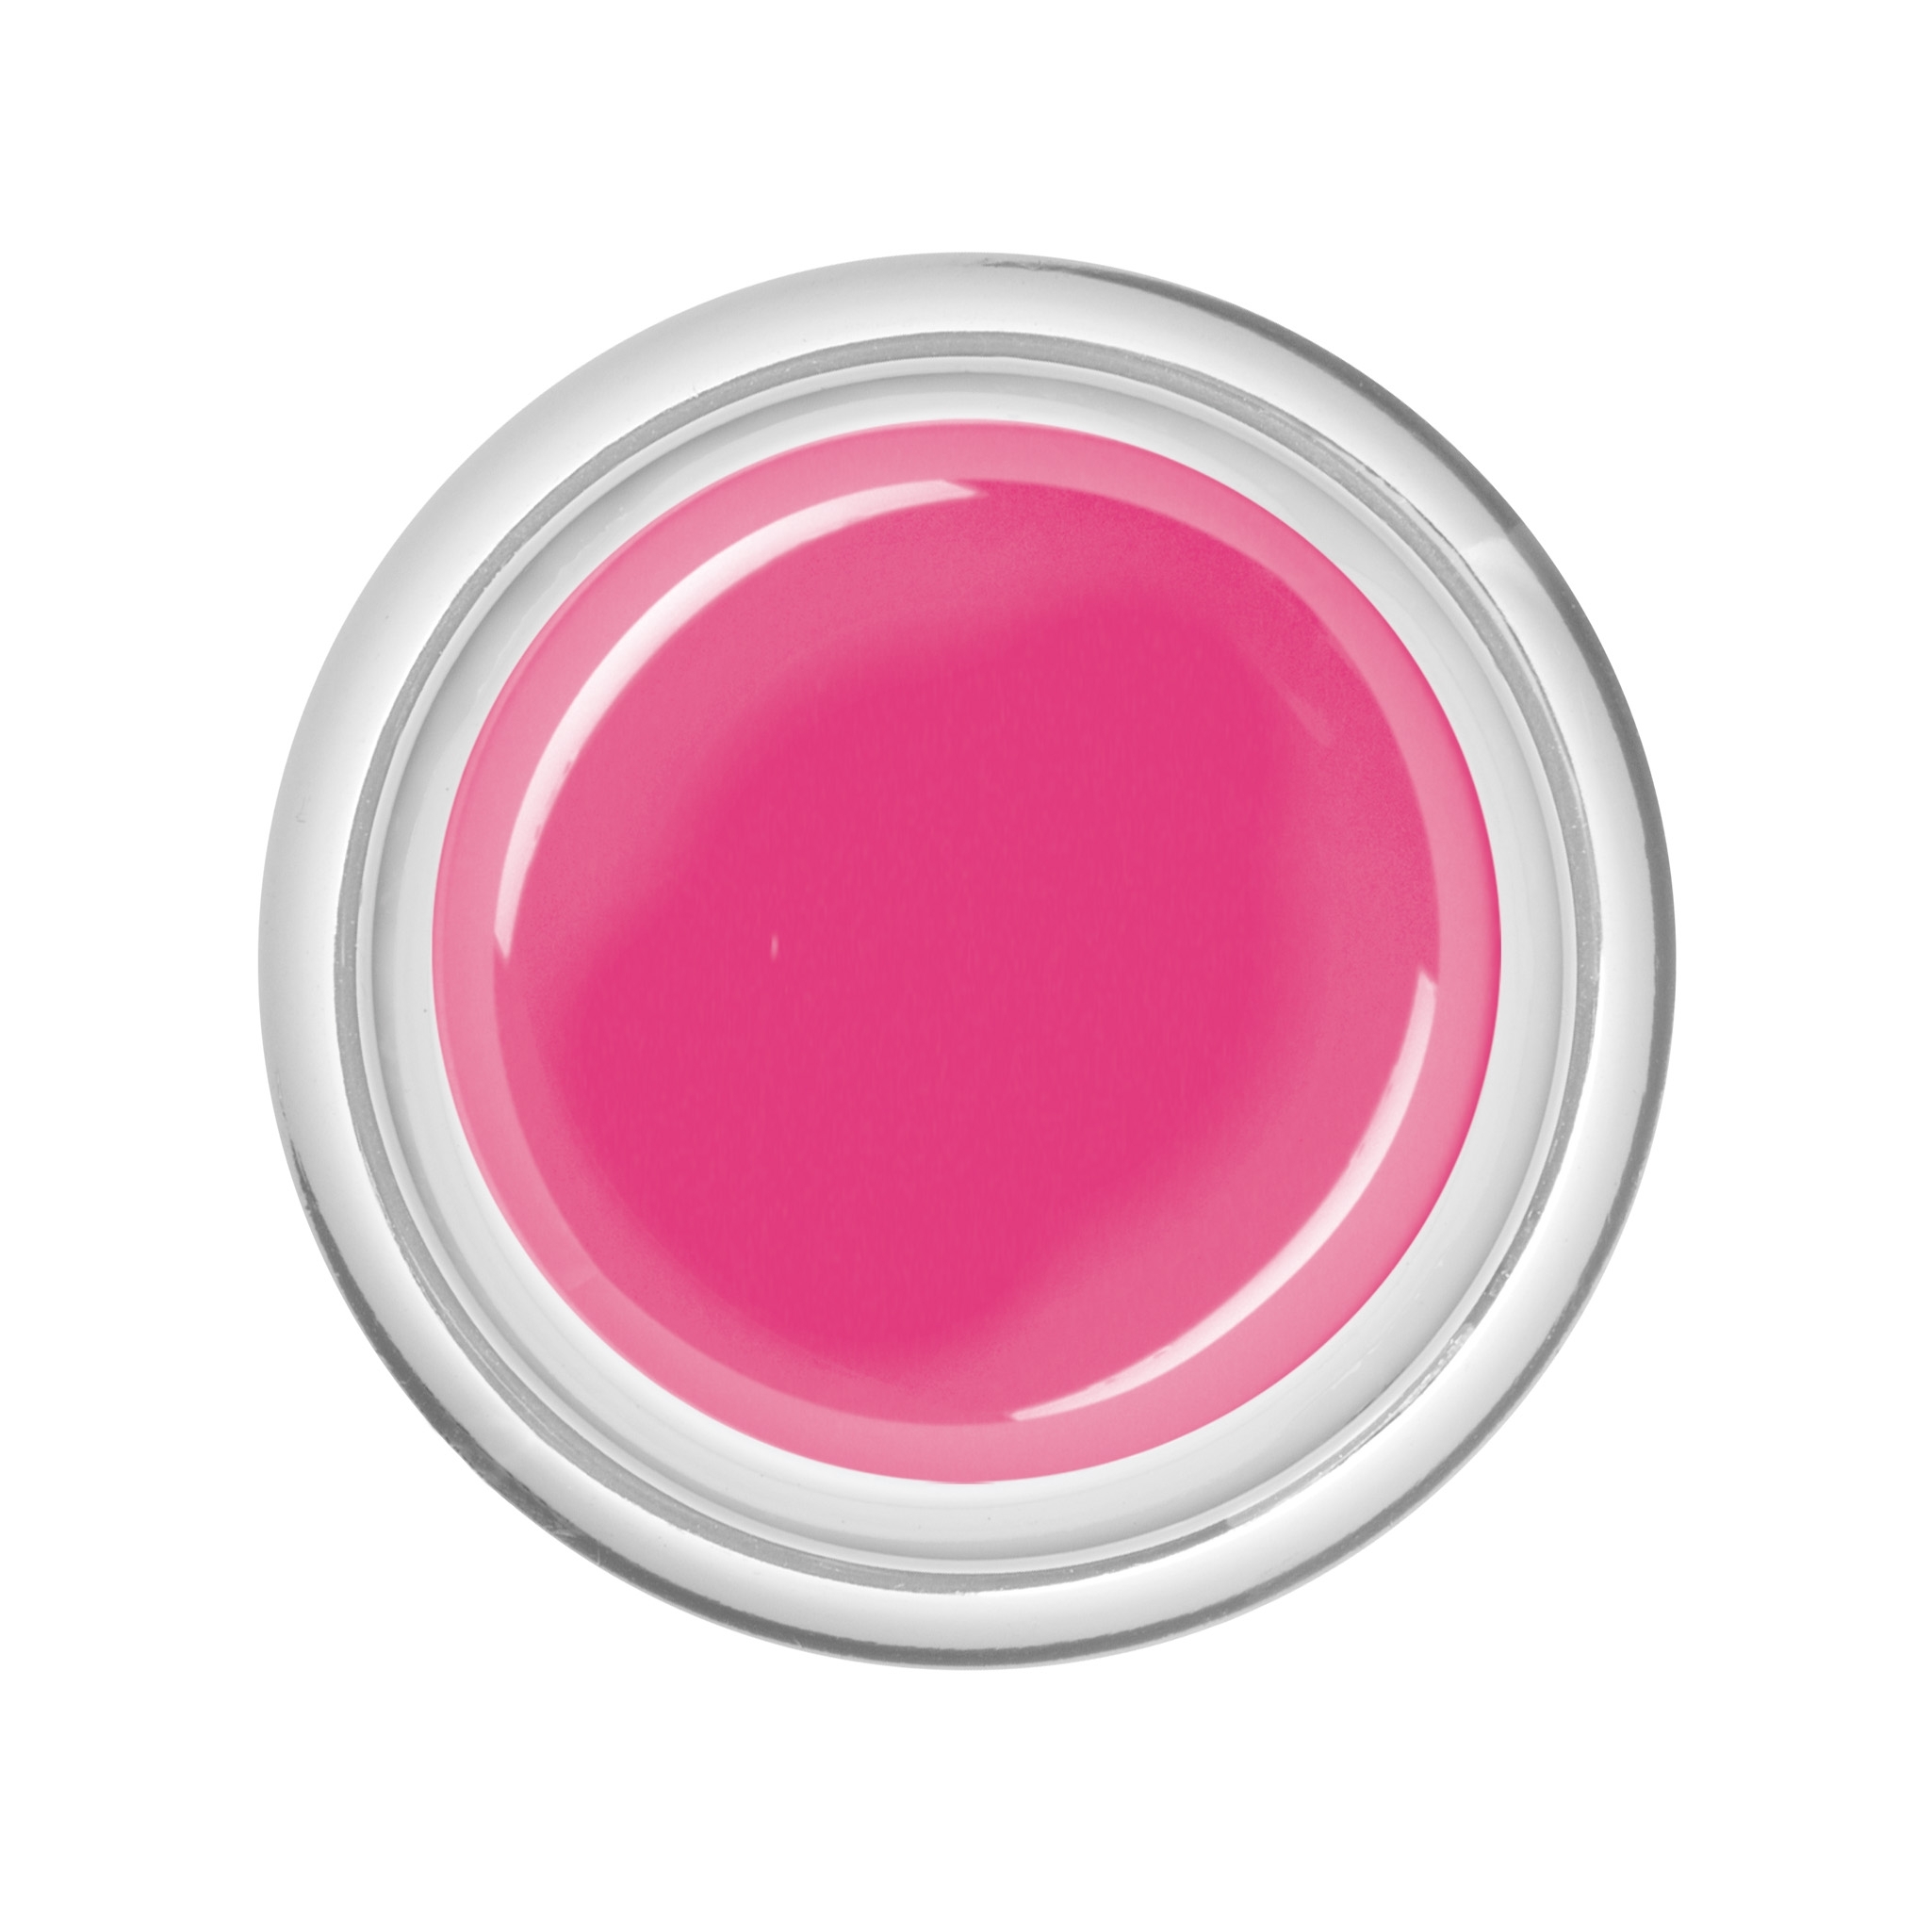 BAEHR BEAUTY CONCEPT - NAILS Colour-Gel Raspberry 5 ml